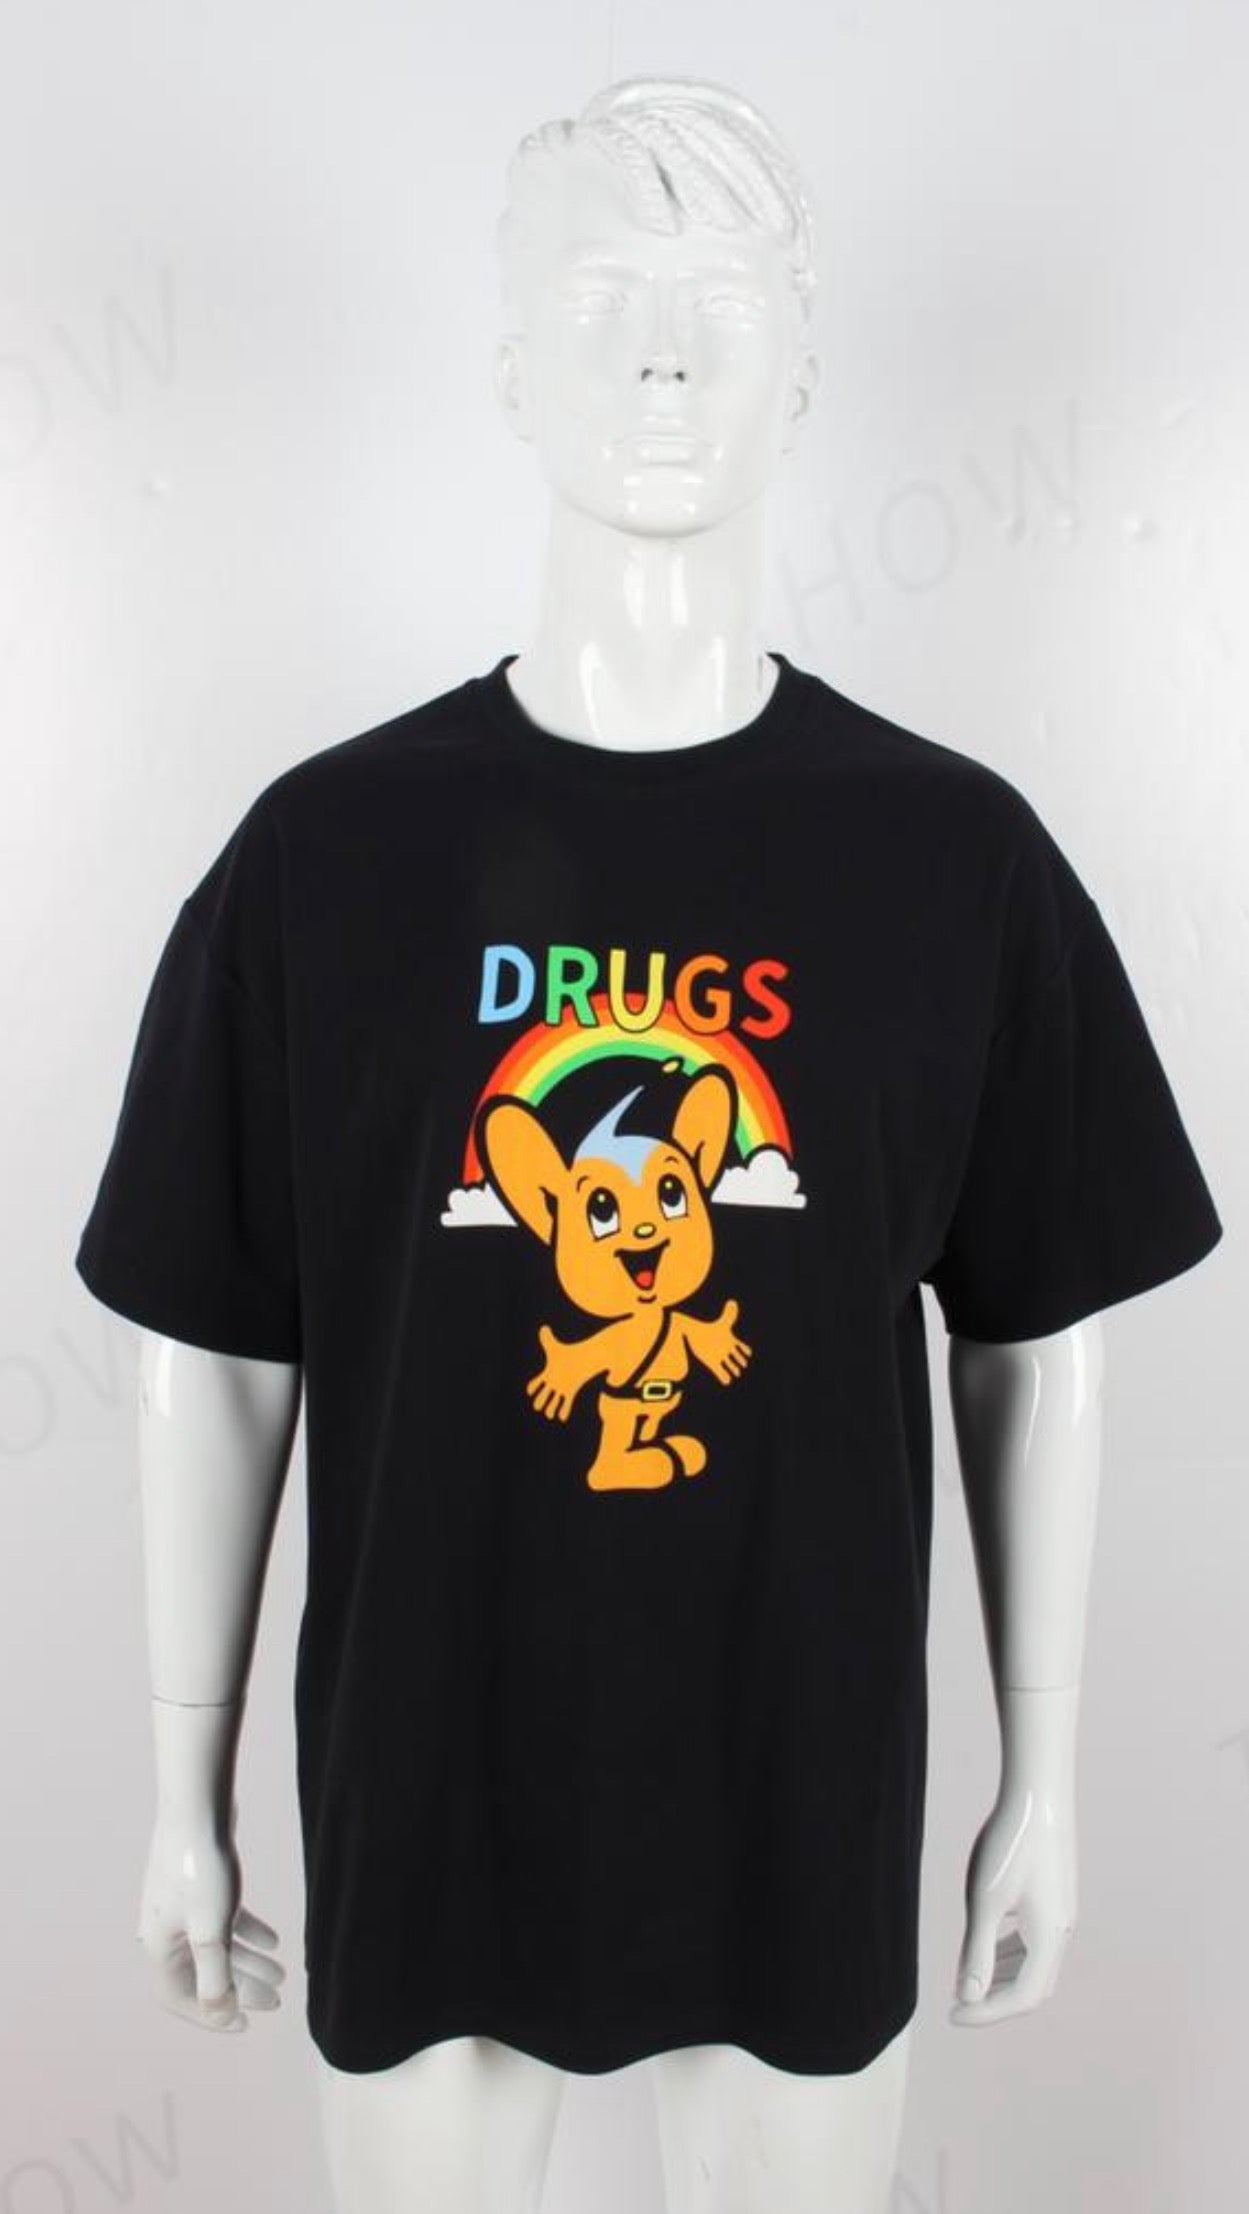 DRUGS Black T-Shirt